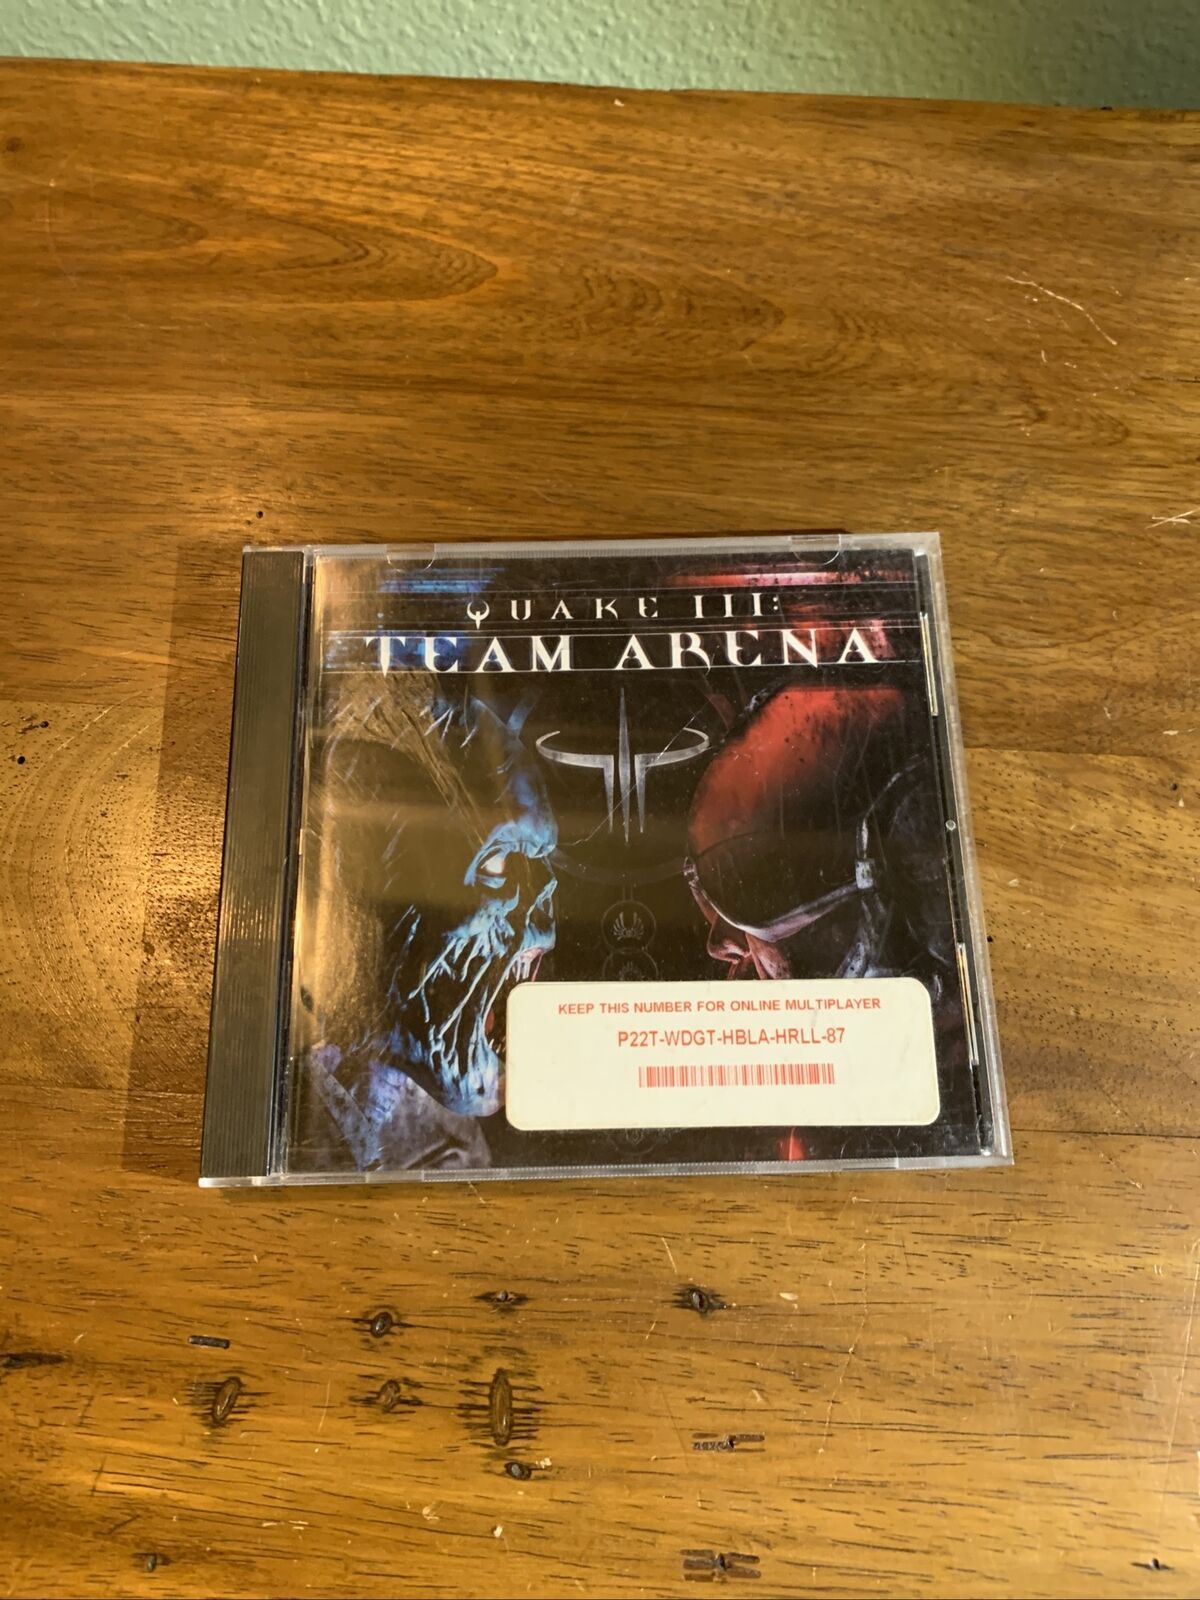 Primary image for Quake III: Team Arena (PC, 2000) Quake 3 W/Manual Jewel Case ID Games Disc